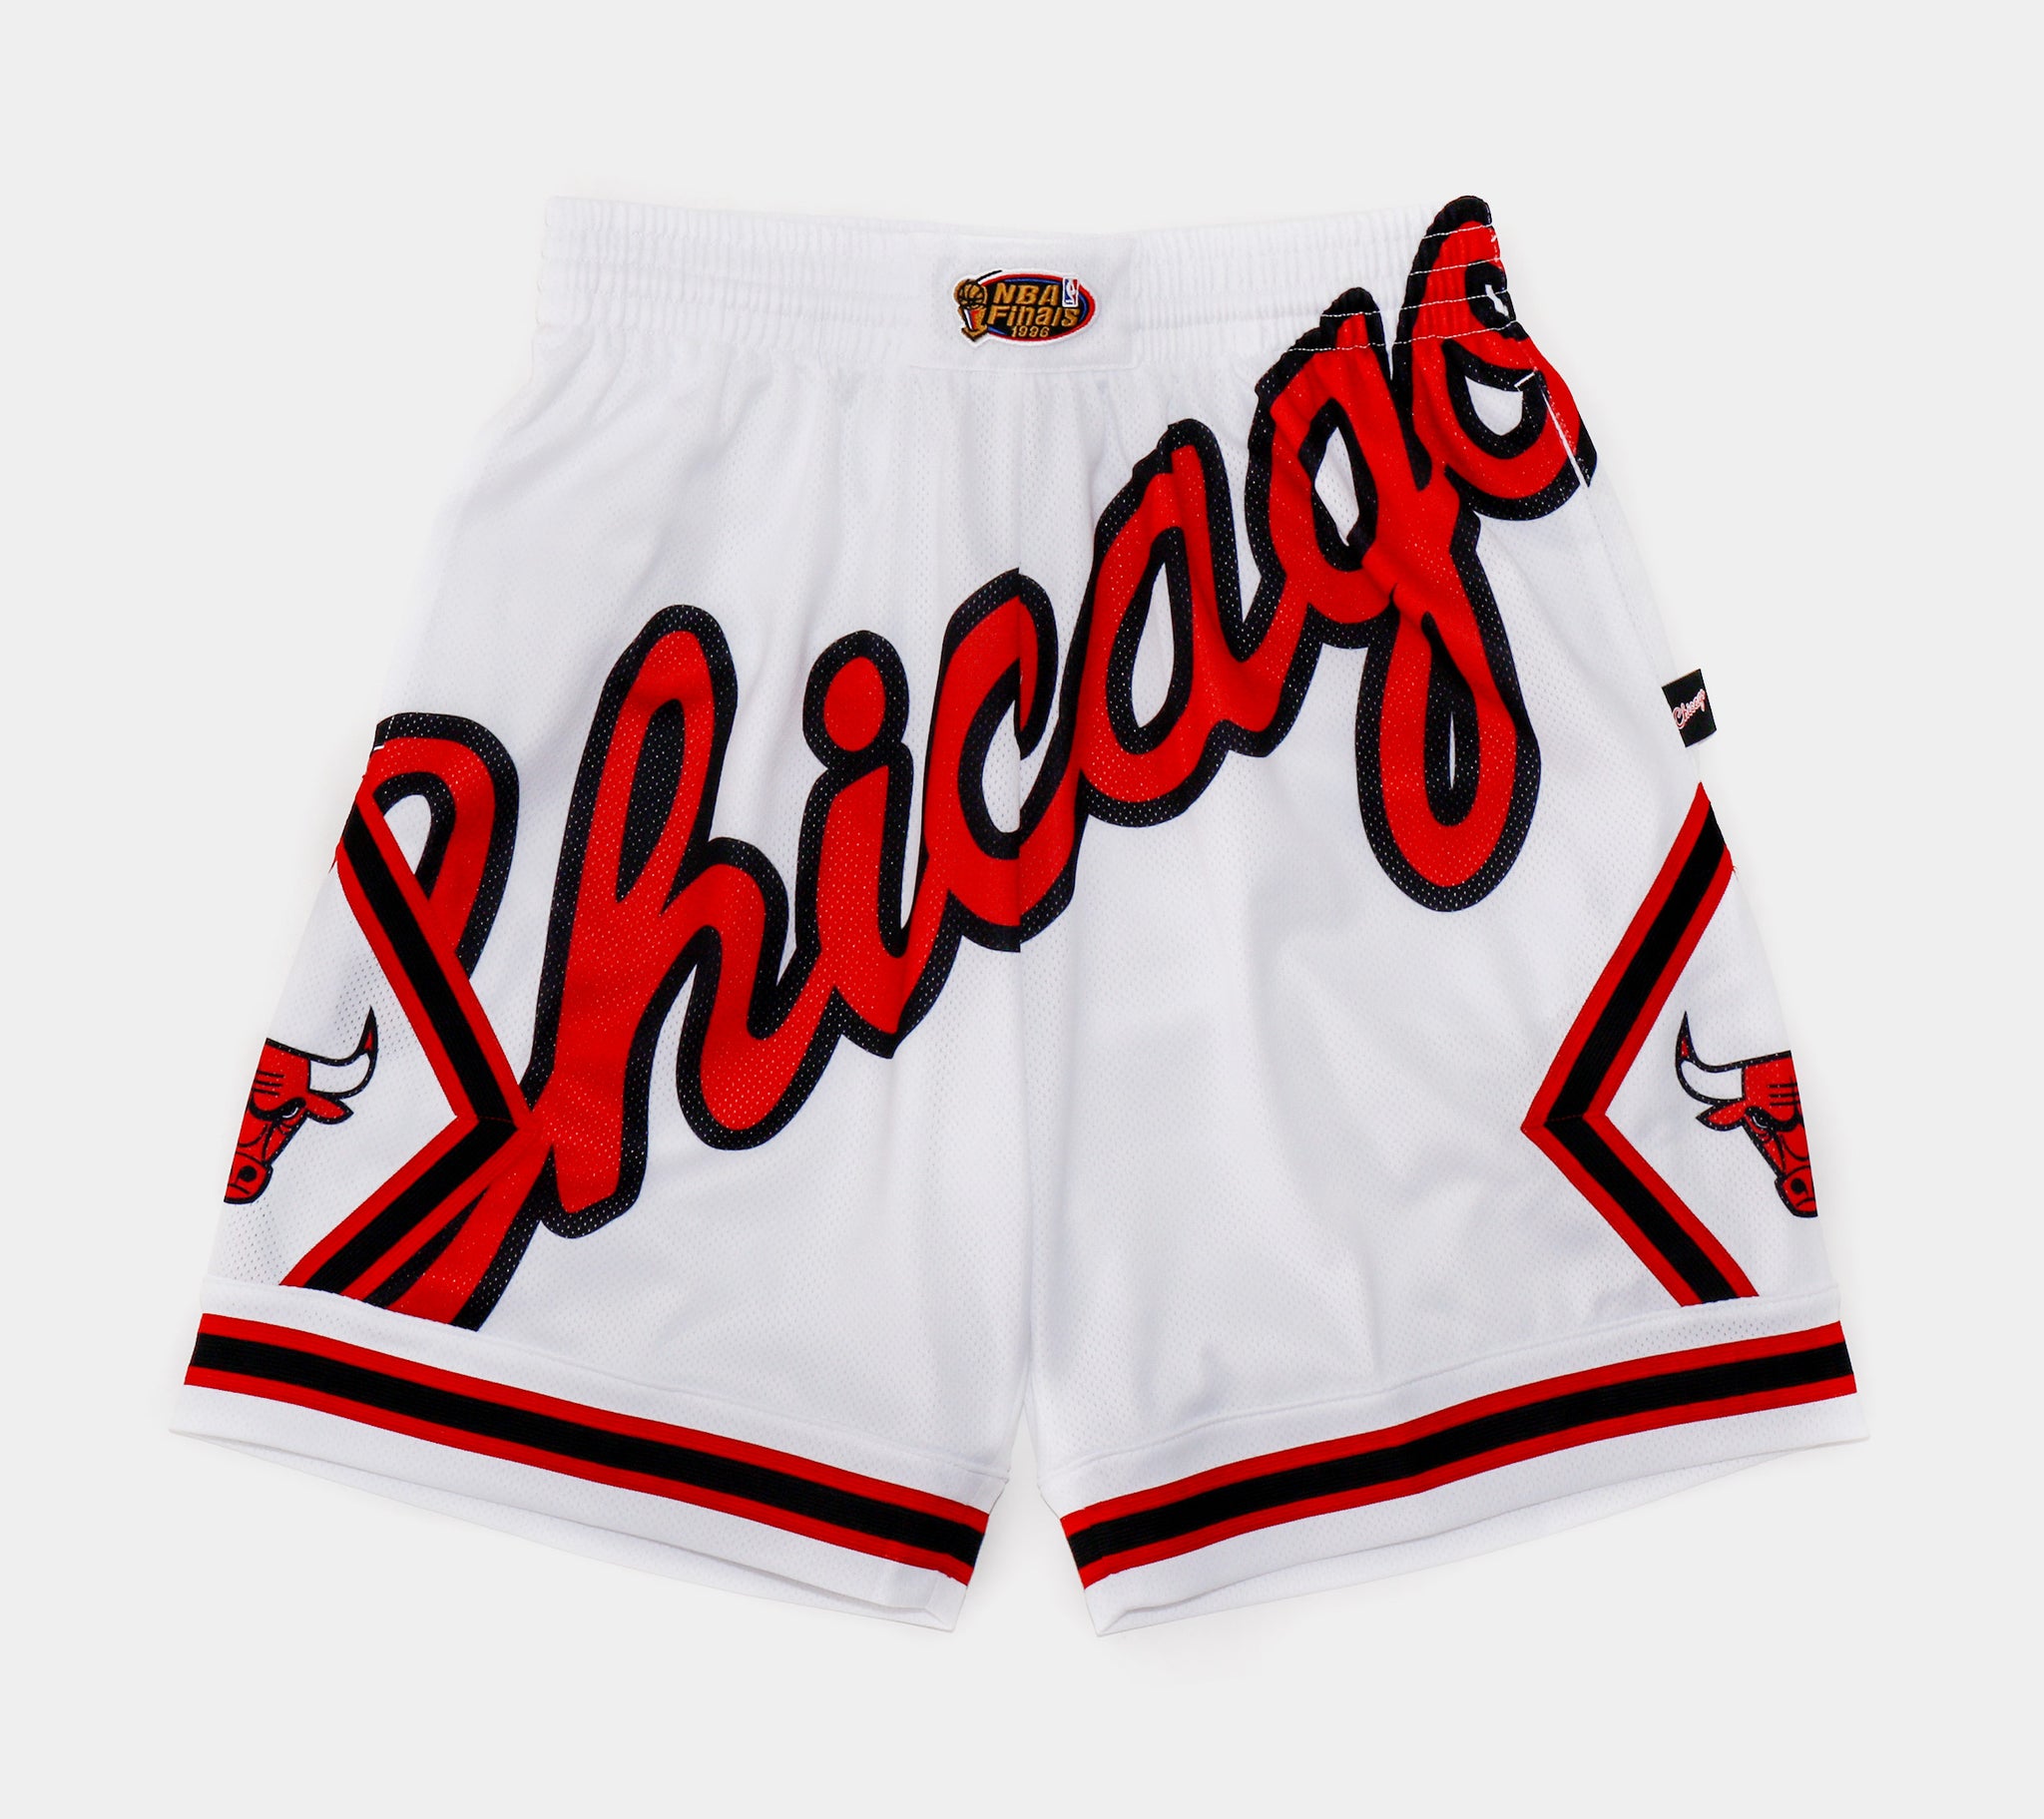 mitchell & ness chicago bulls shorts